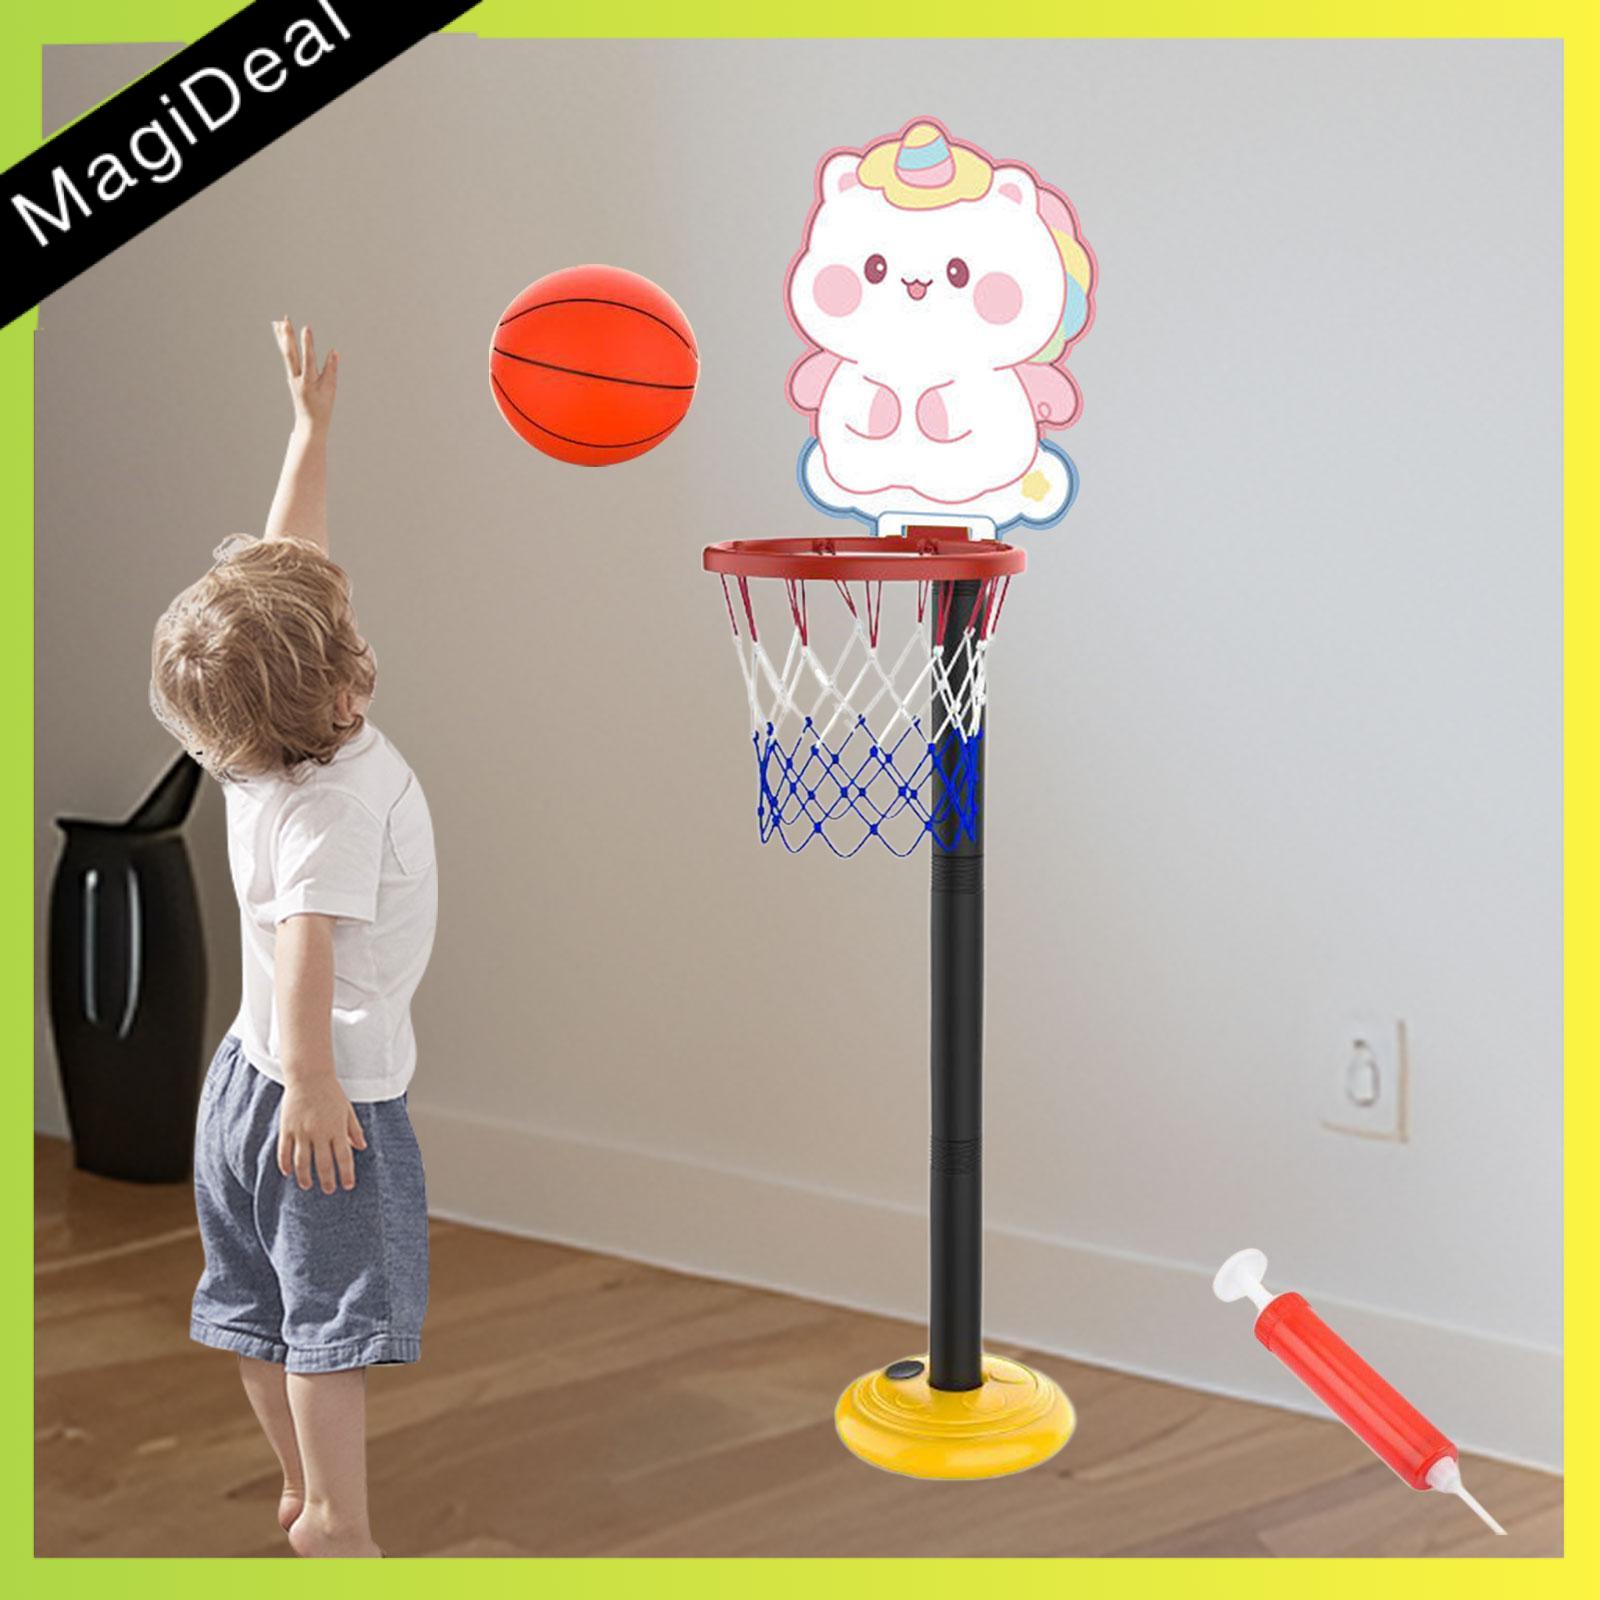 MagiDeal Kids Basketball Hoop Basketball Stand Sports Space Saving